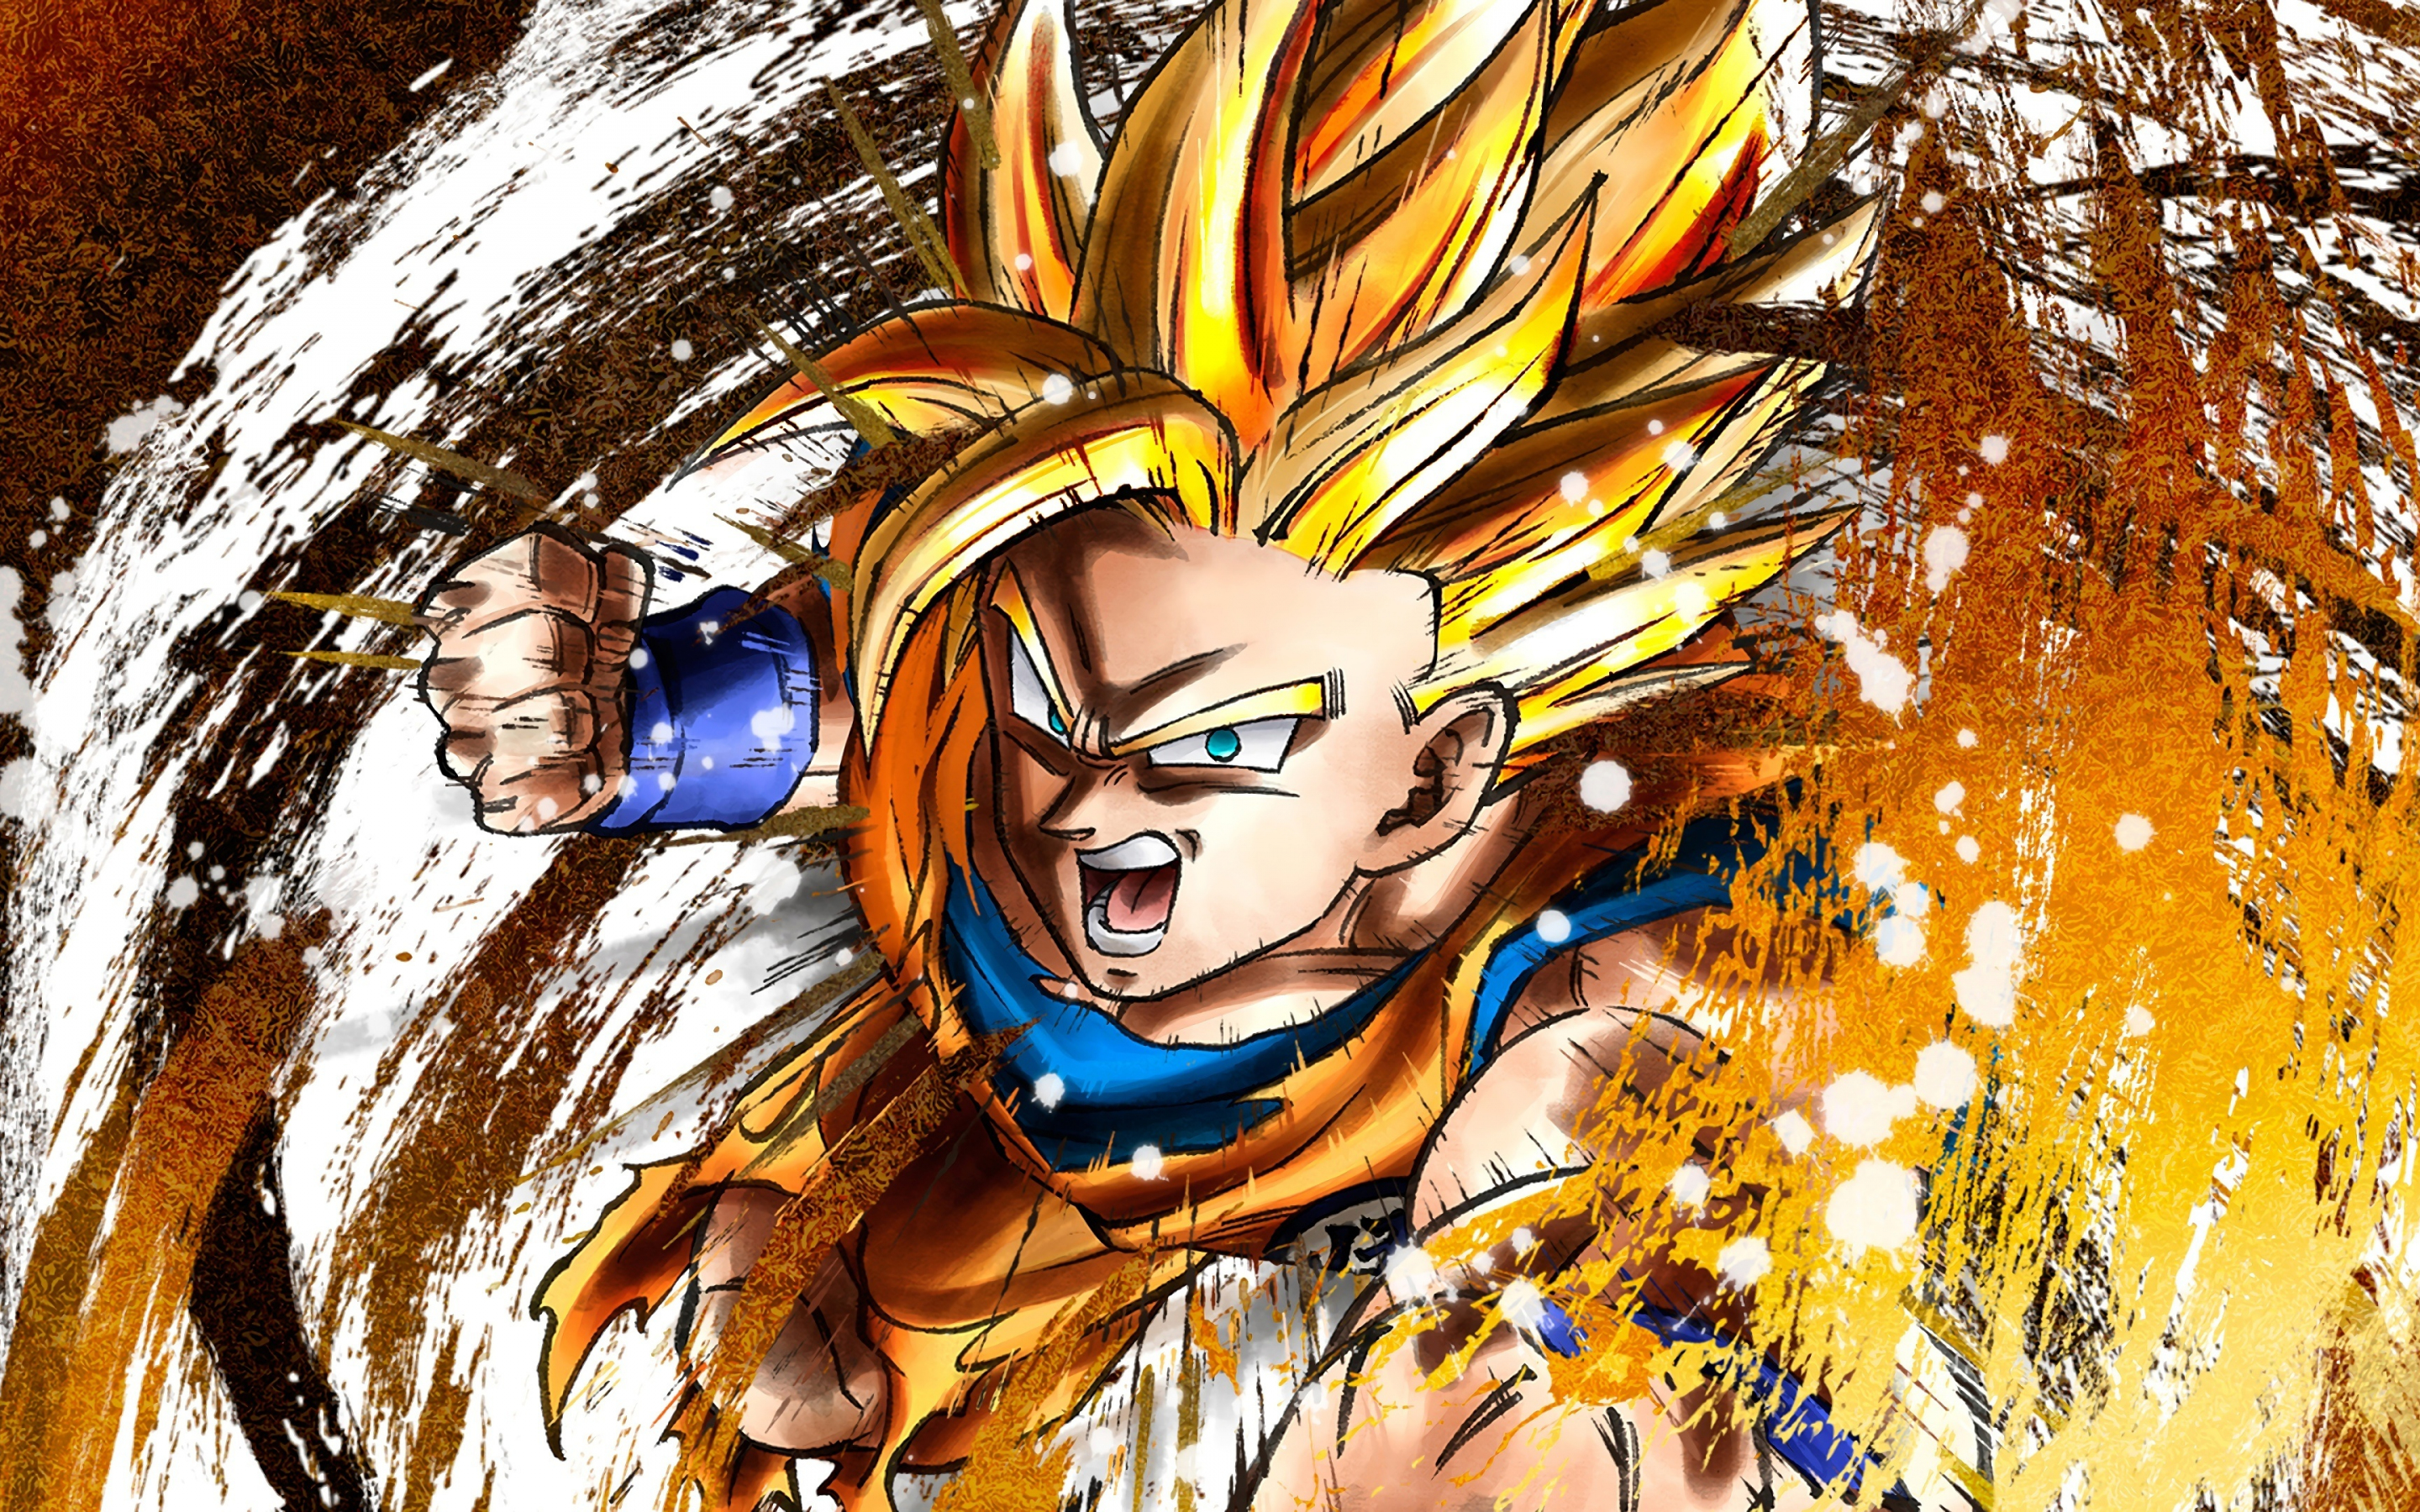 Artwork, Goku, Dragon Ball FighterZ, Console game, 2880x1800 wallpaper